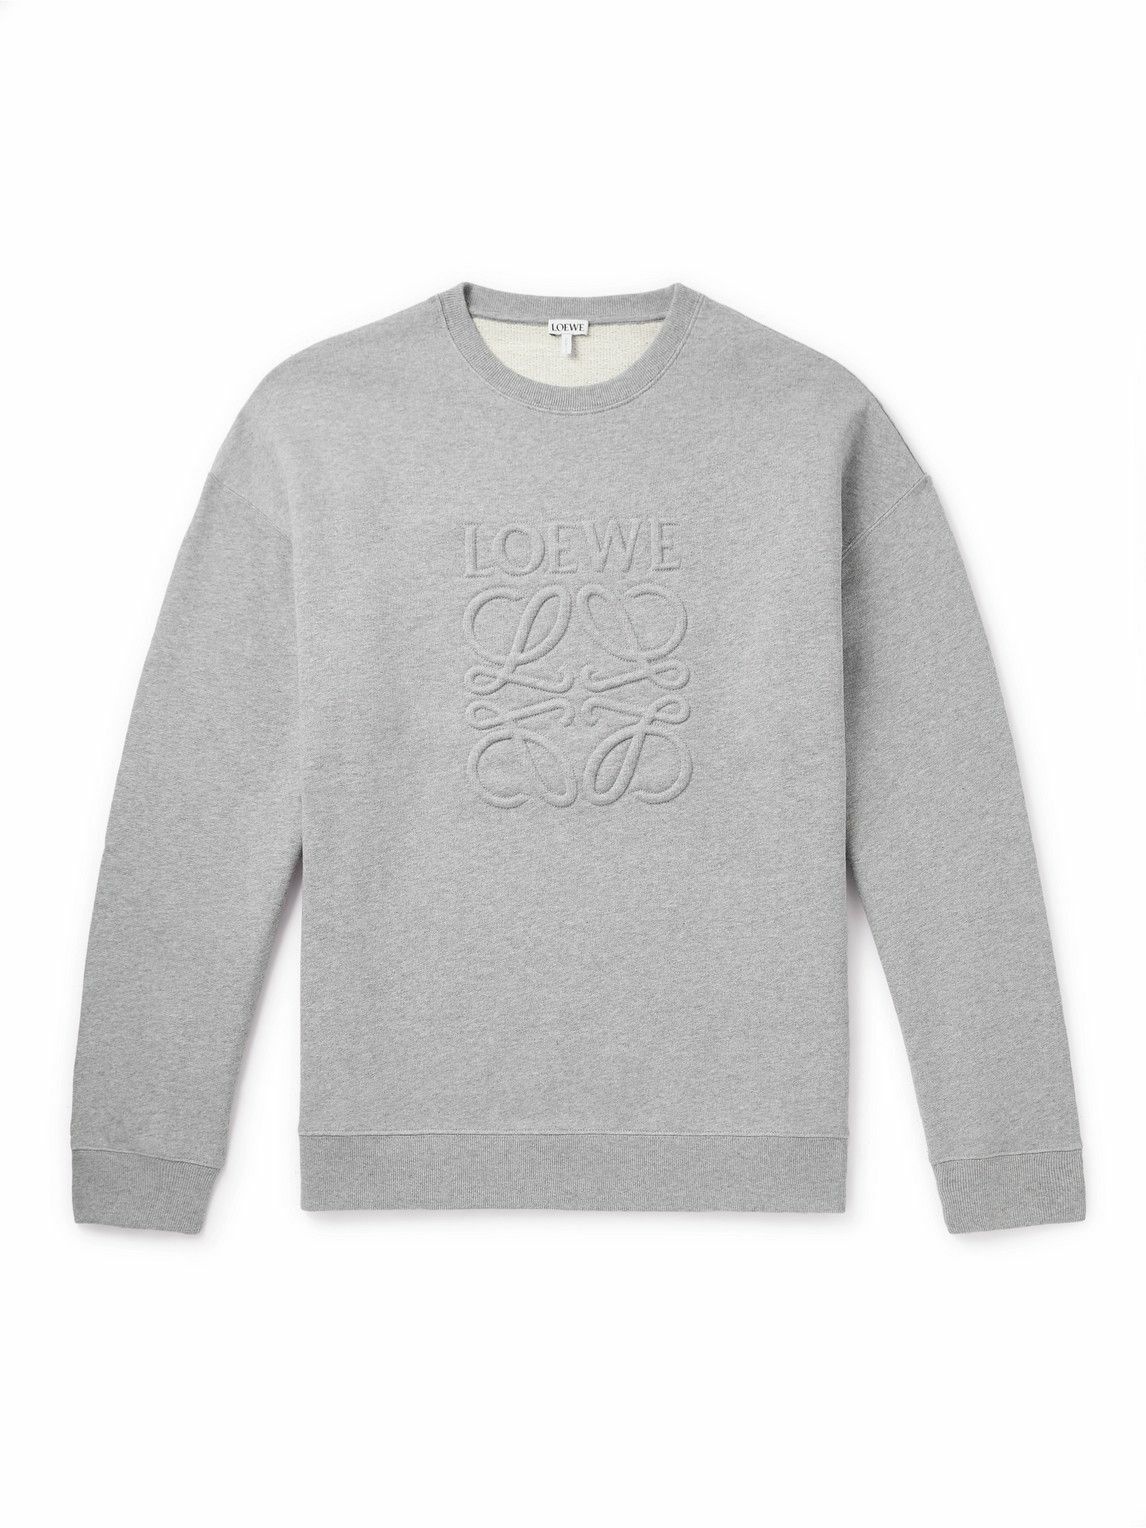 Photo: LOEWE - Logo-Embroidered Cotton-Jersey Sweatshirt - Gray